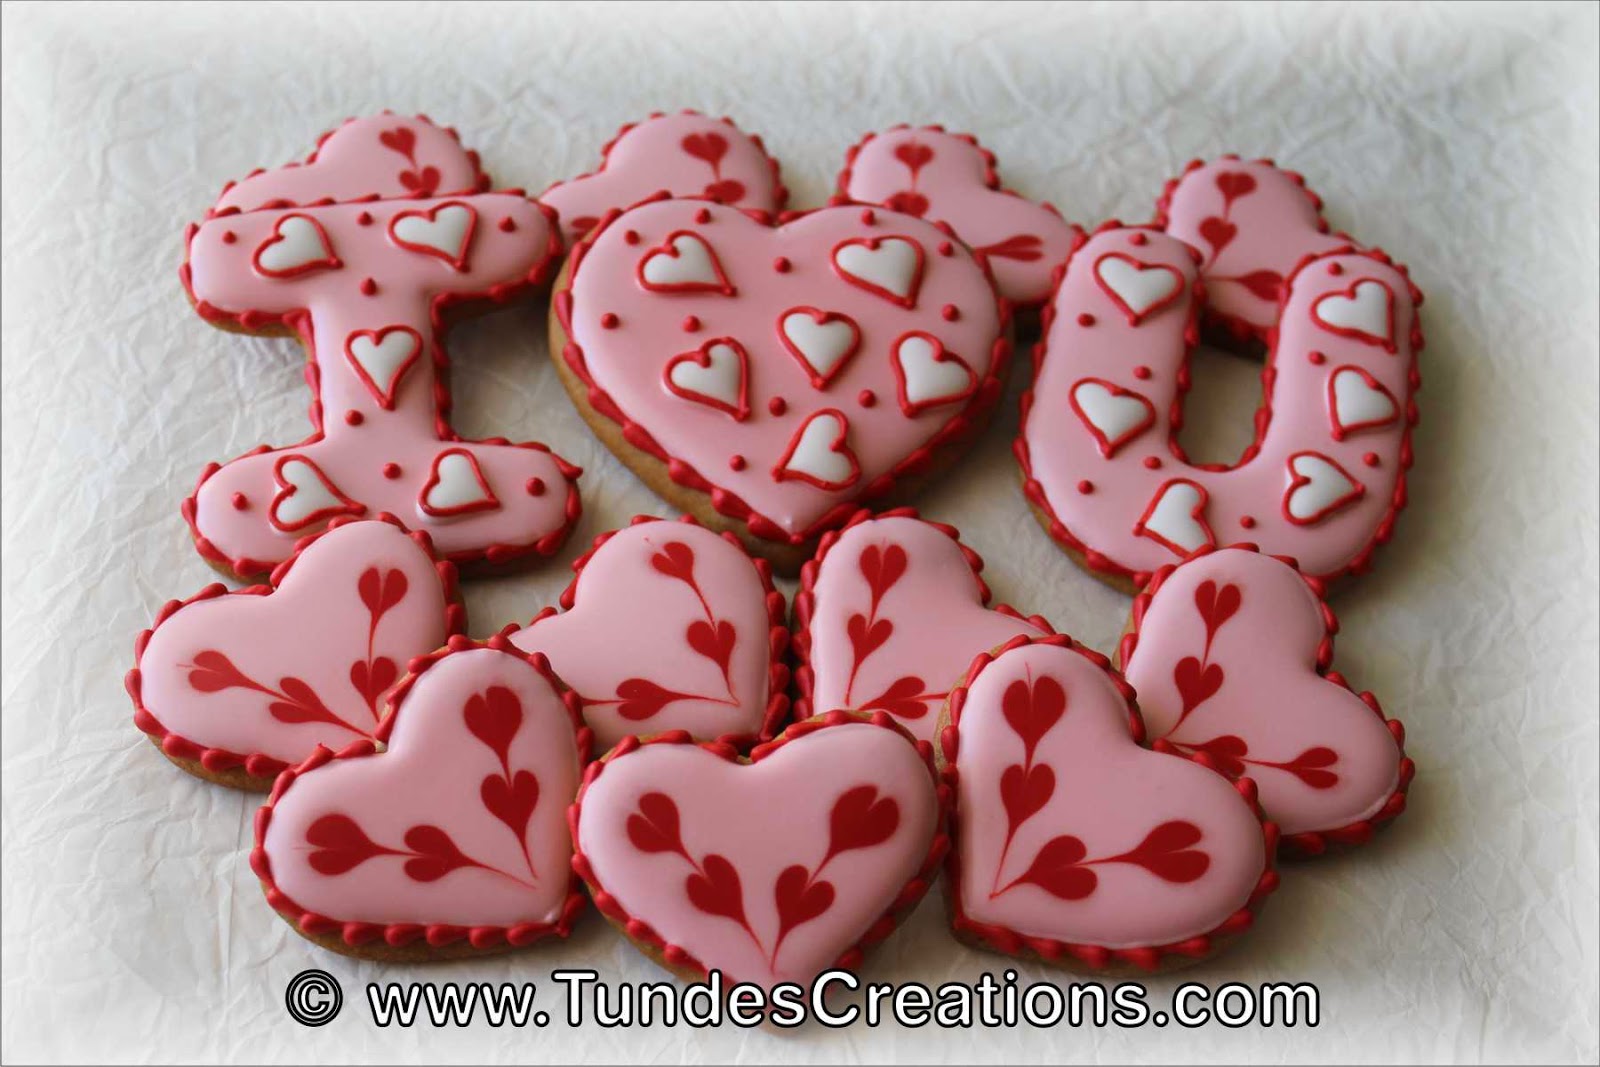 I heart U cookies